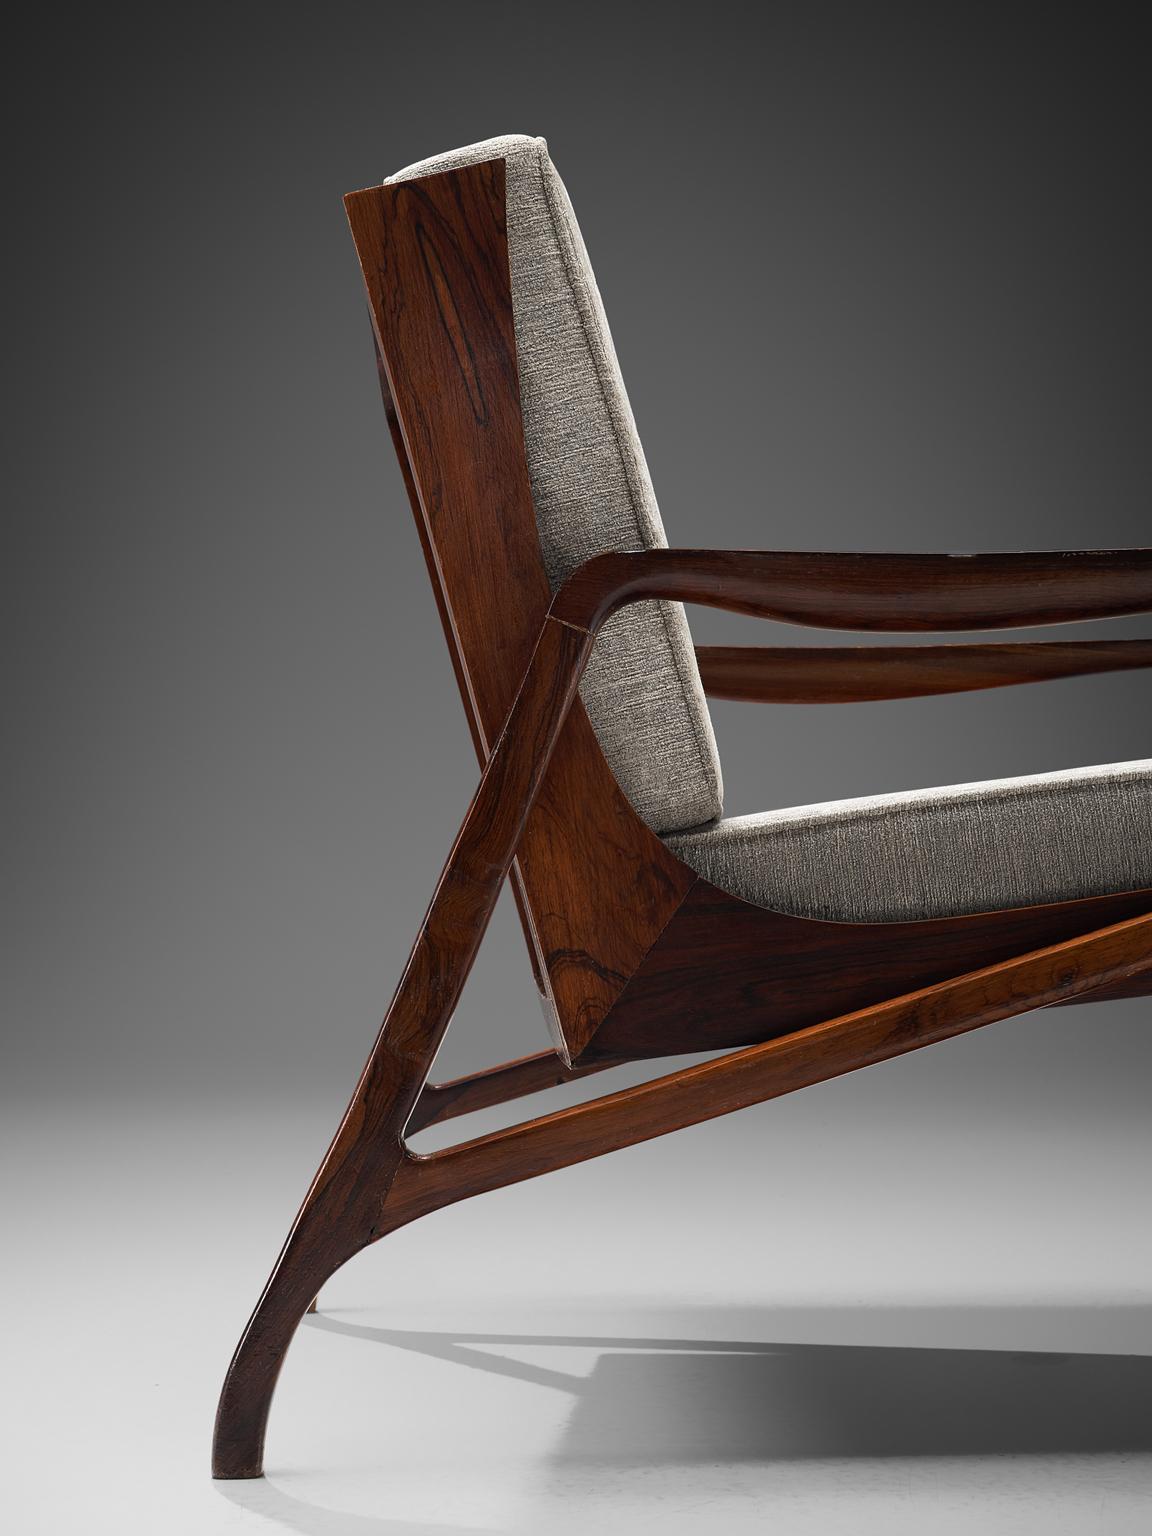 Fabric Brazilian Rosewood Easy Chairs by Liceu de Artes e Officios